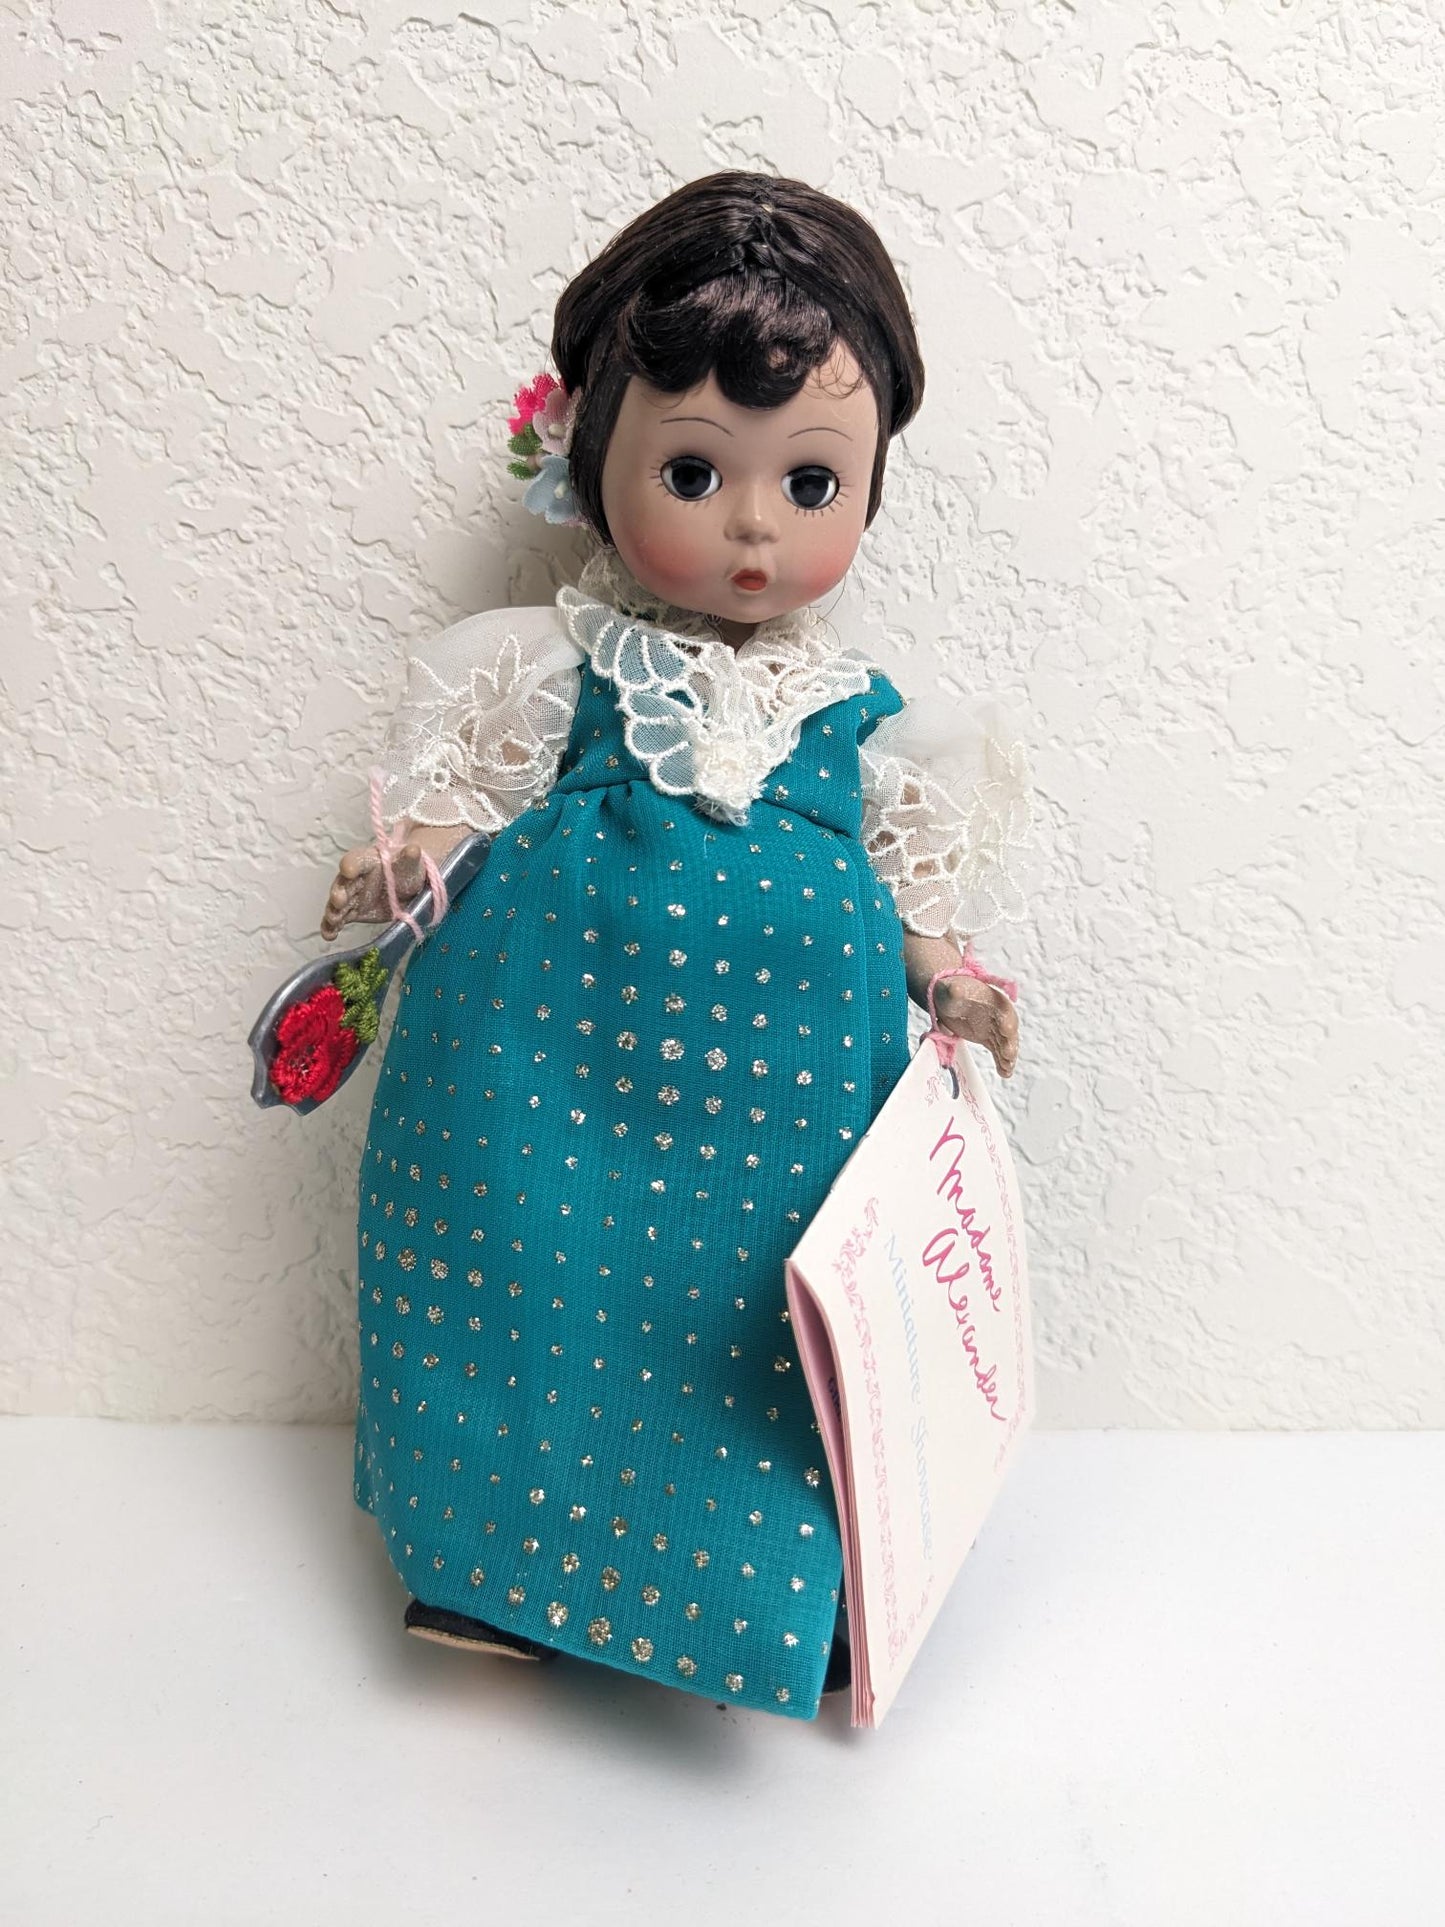 Madame Alexander 'Philippines' Vintage Doll